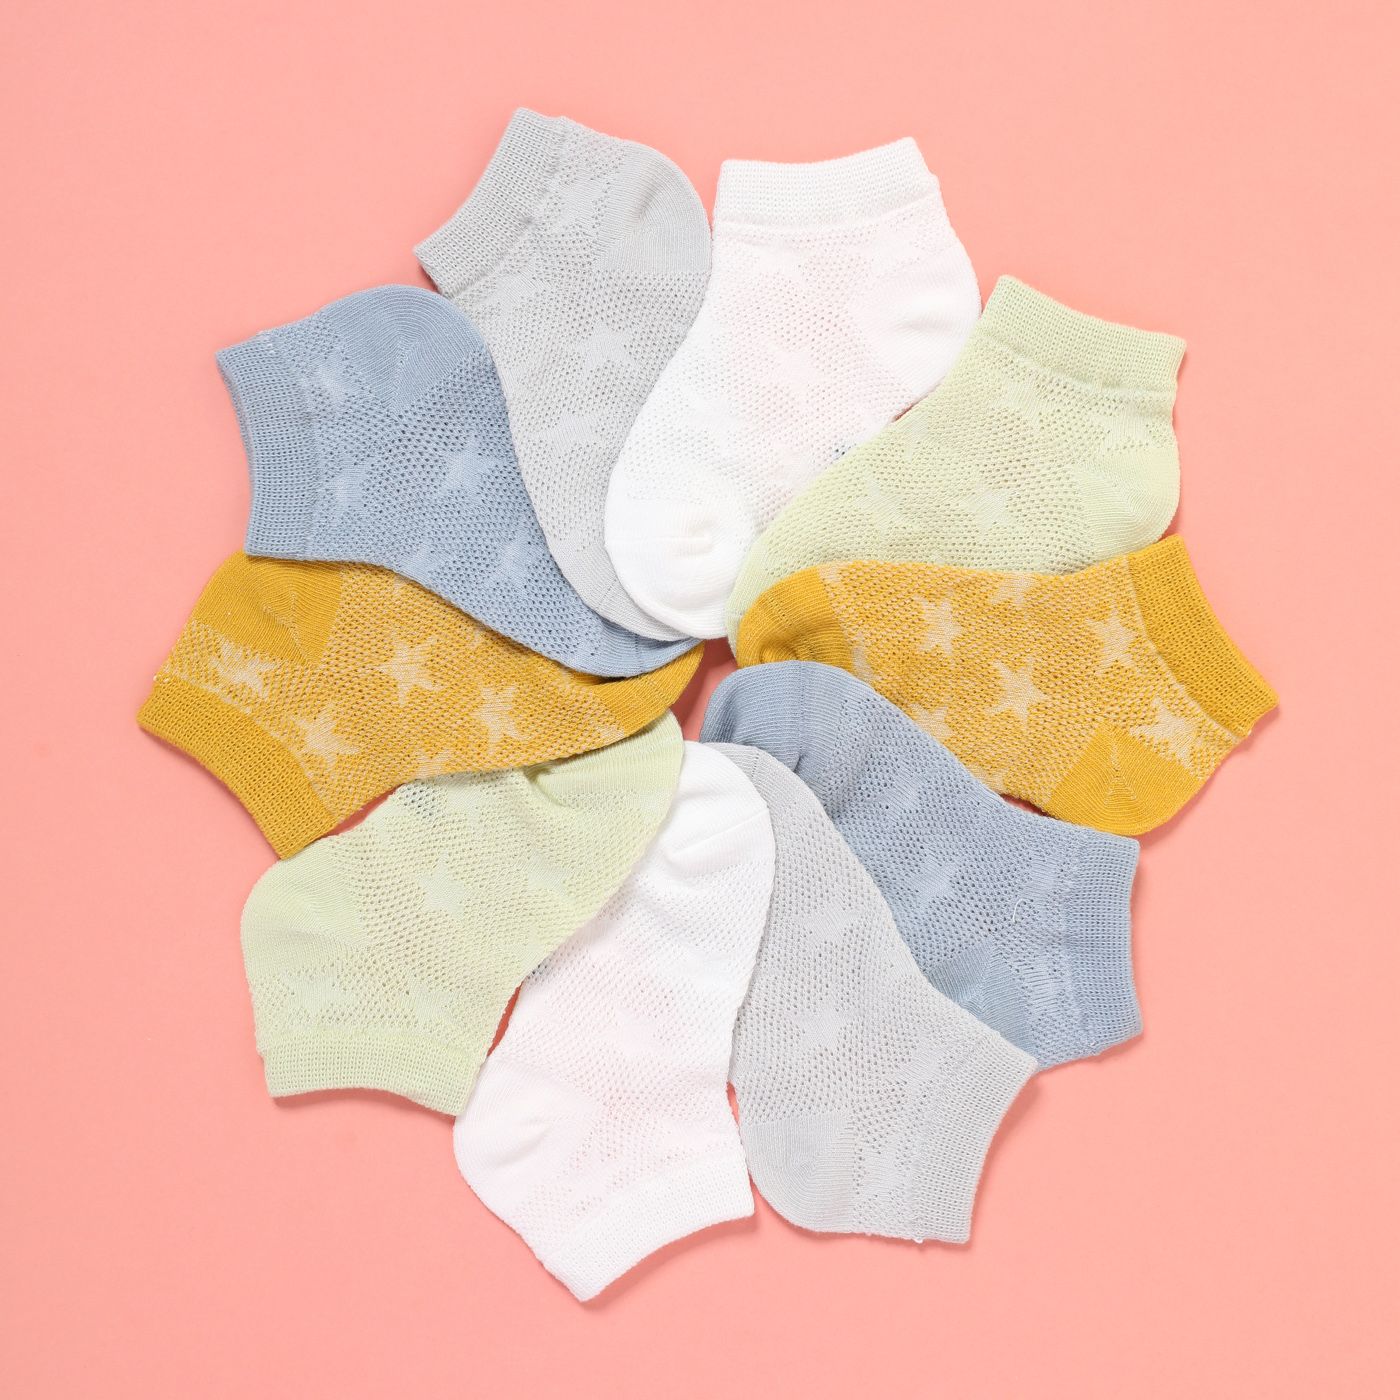 5-pairs Baby / Toddler / Kid Heart Stars Pattern Mesh Panel Socks